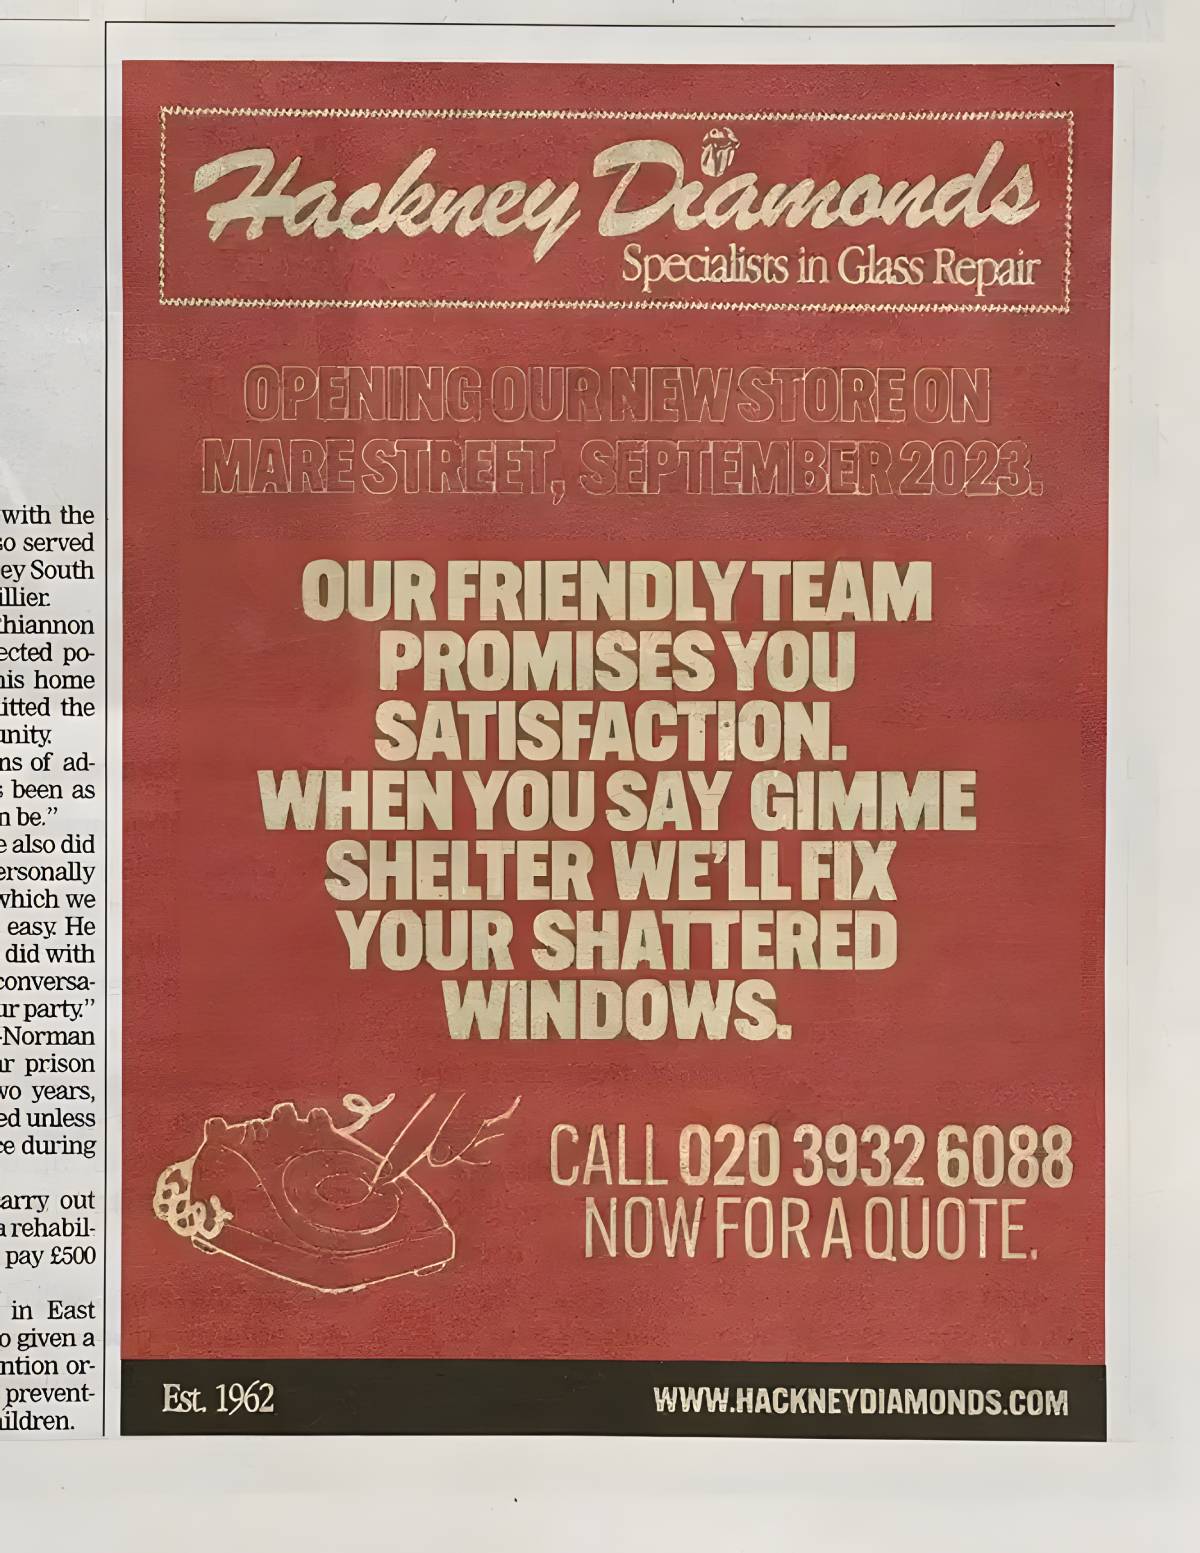 Hackney Diamonds advertising campaign.